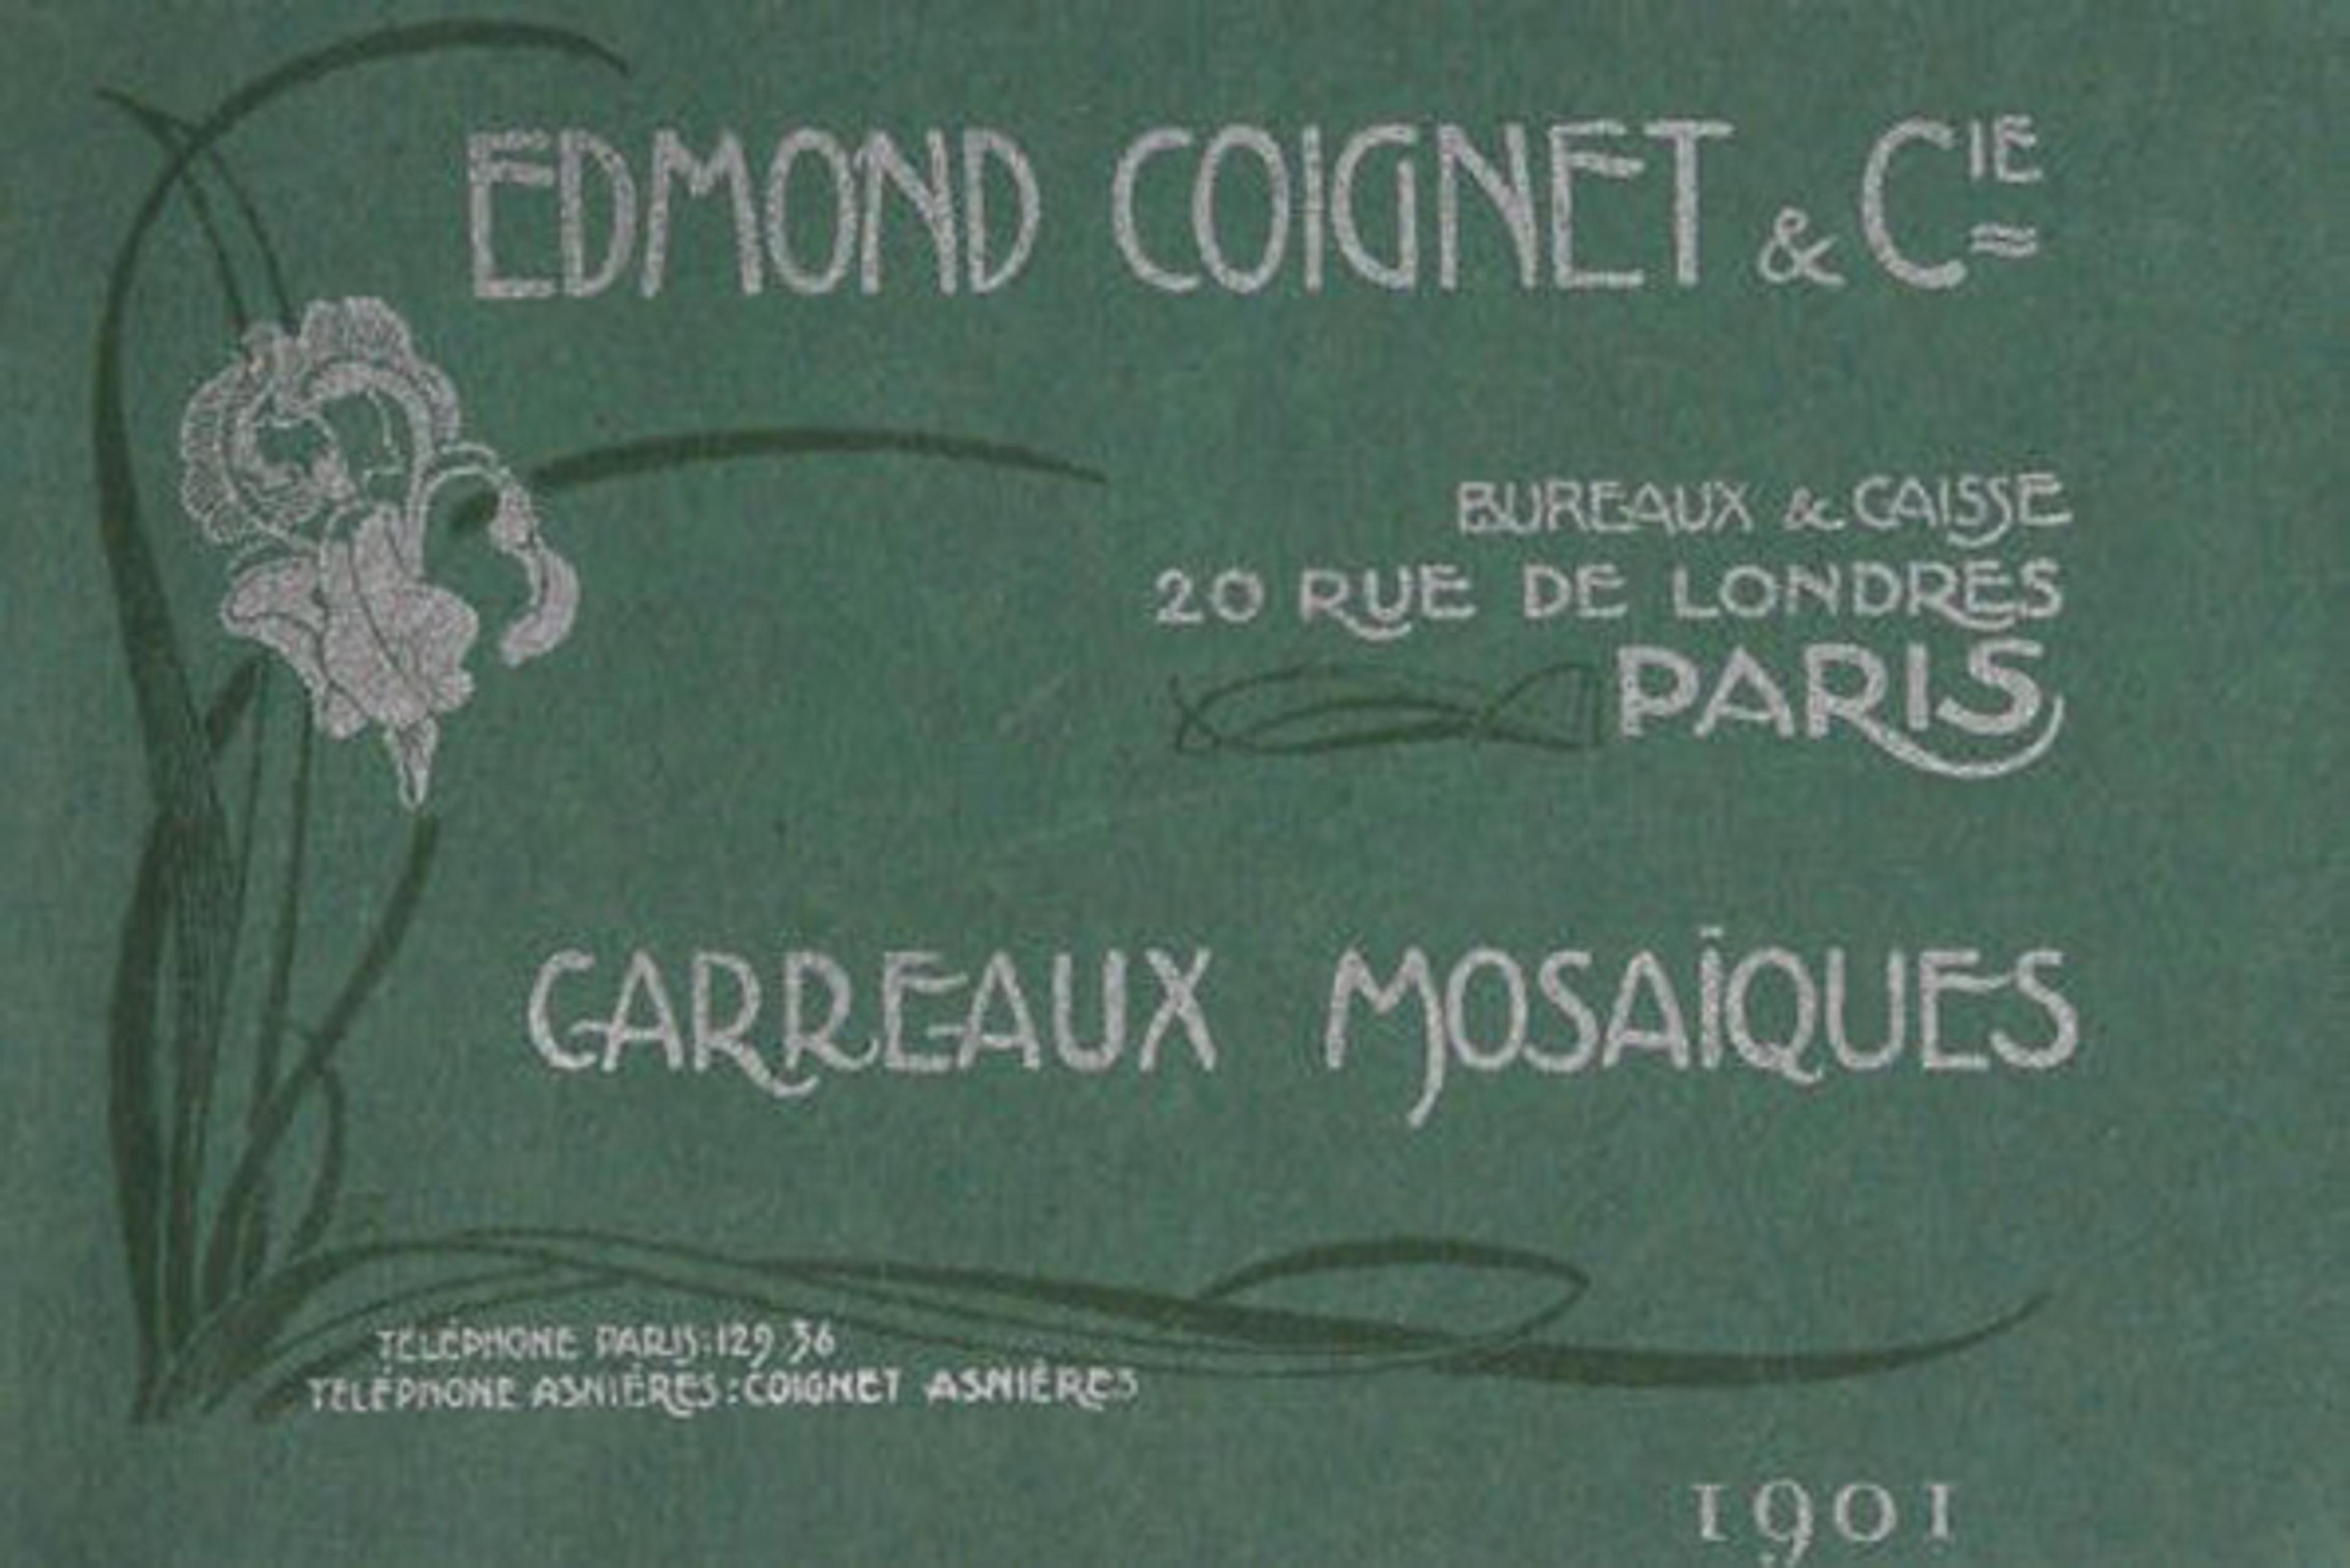 Edmond Coignet & Cie